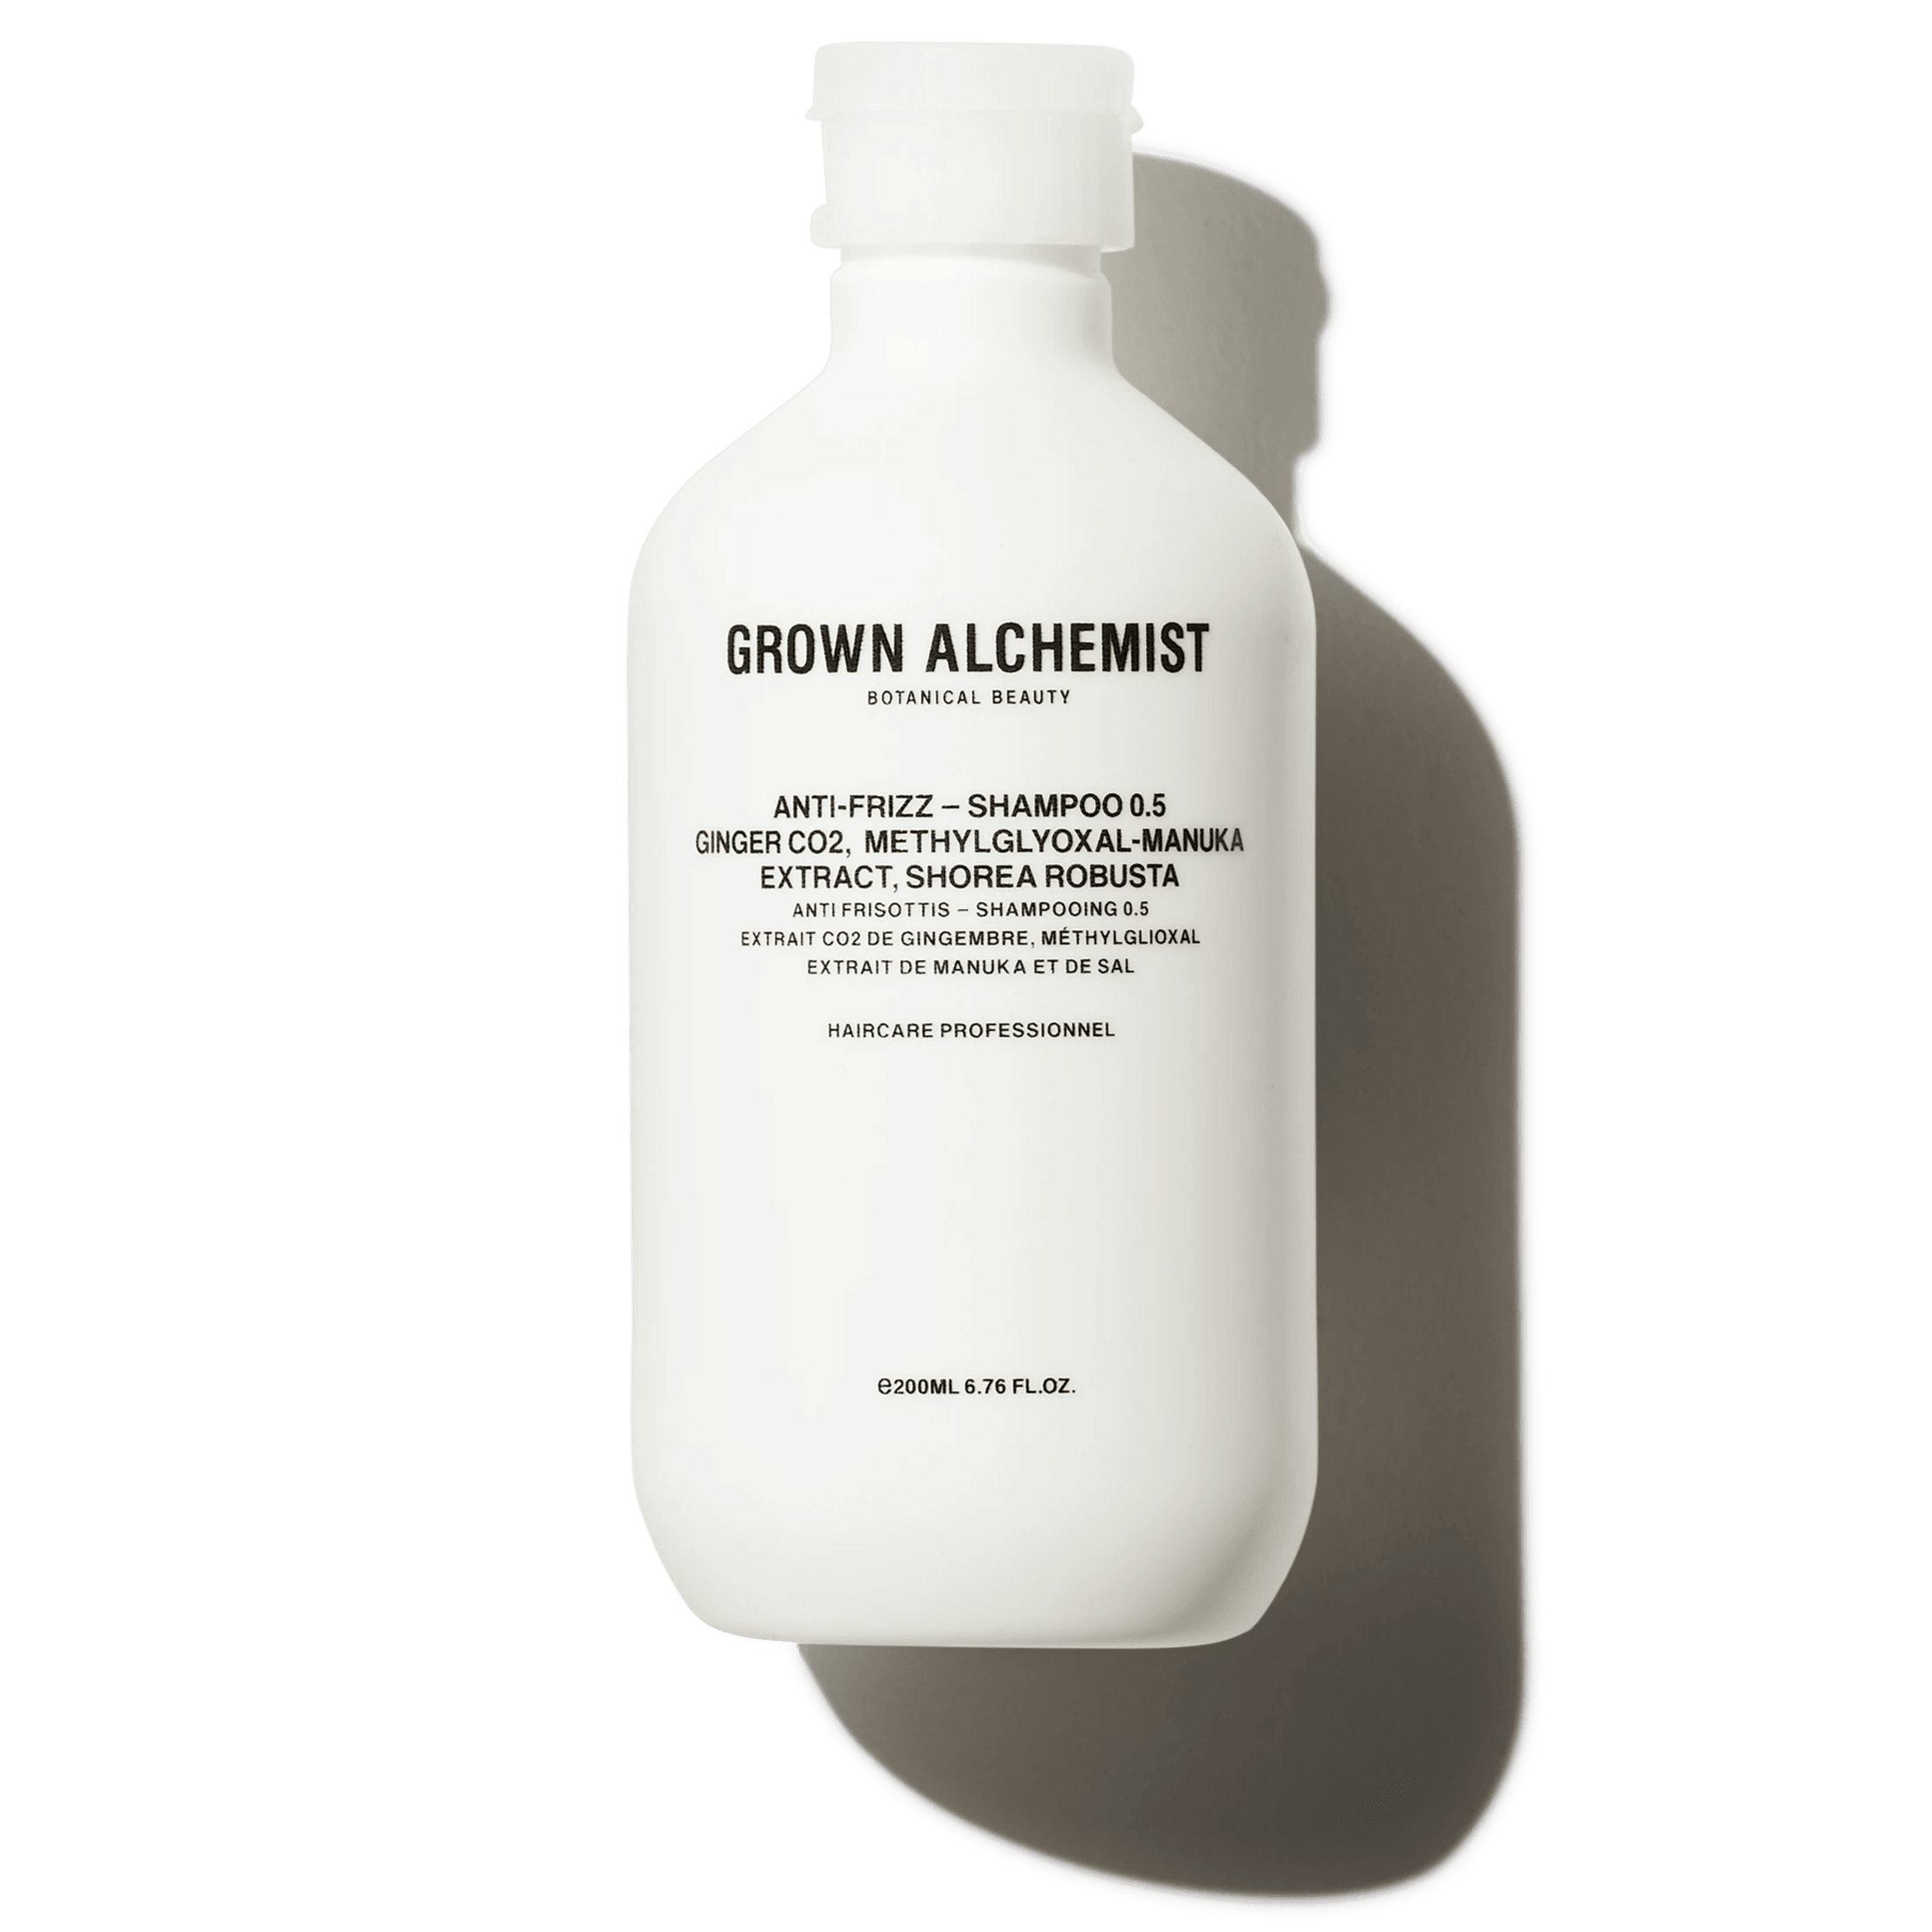 Grown Alchemist Anti-Frizz - Shampoo 0.5: Ginger CO2, Methylglyoxal-Manuka Extract, Shorea Robusta, 200ml